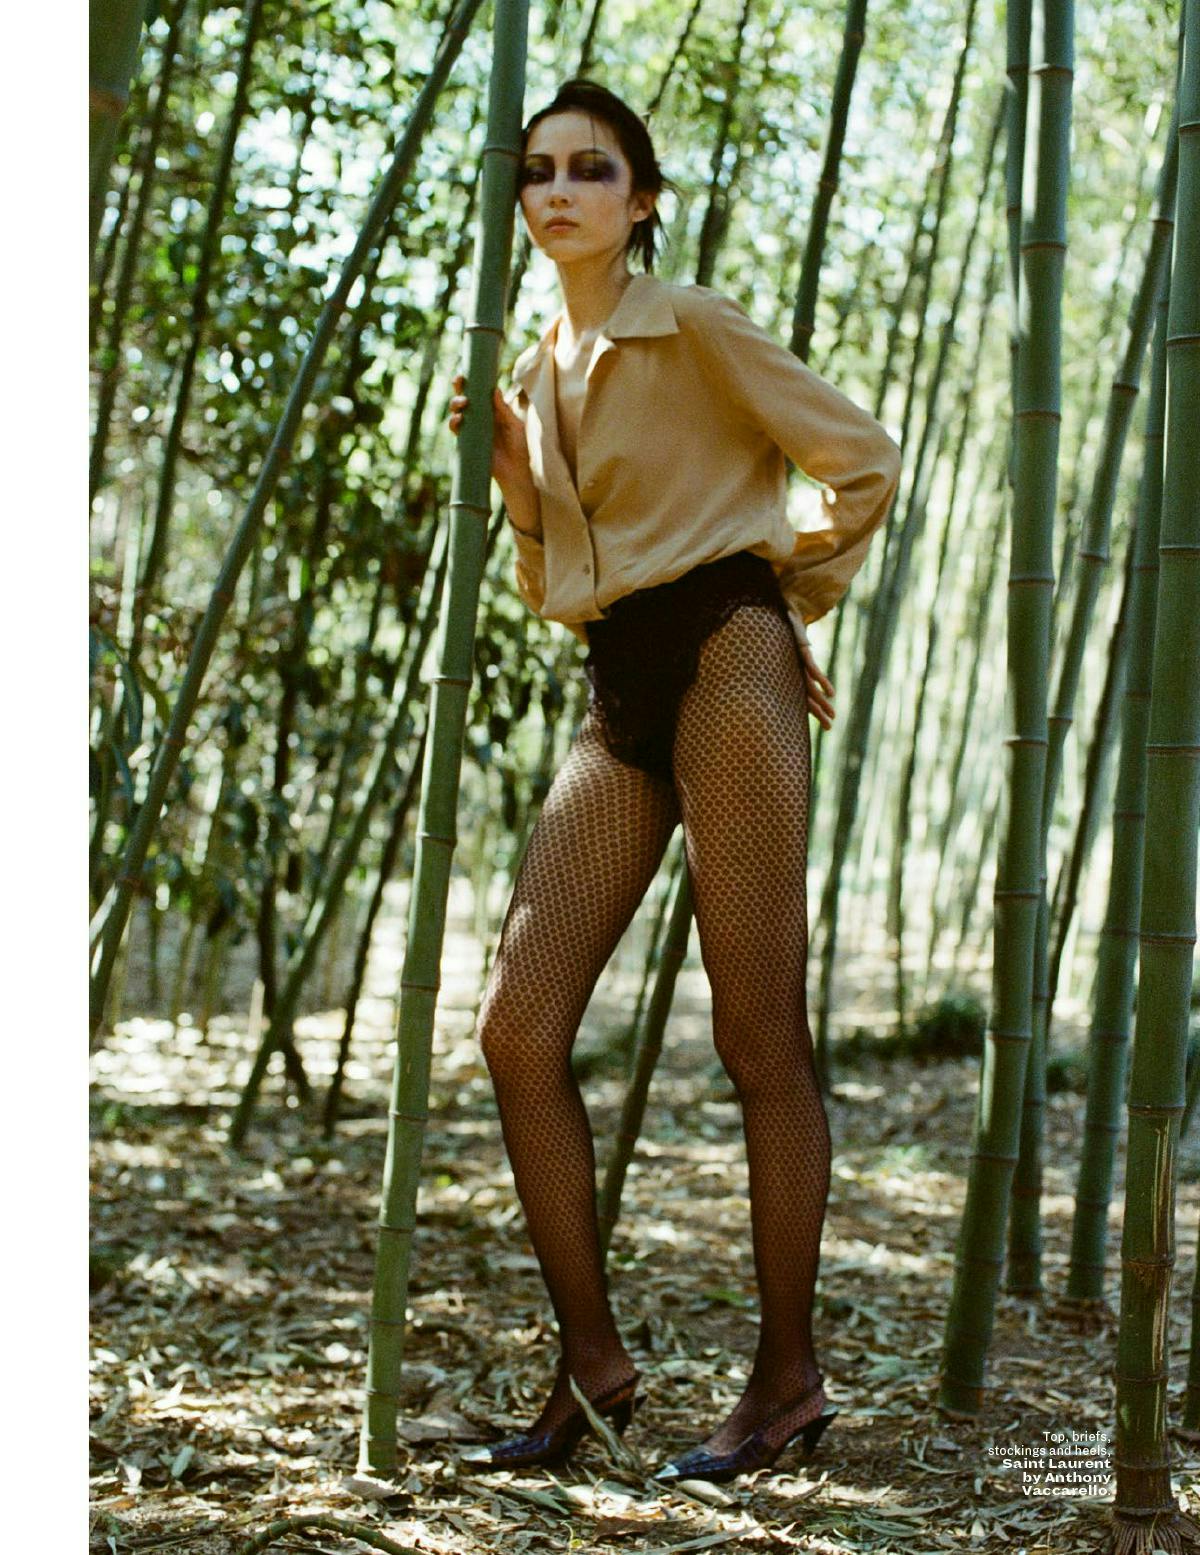 person human clothing apparel plant bamboo pants